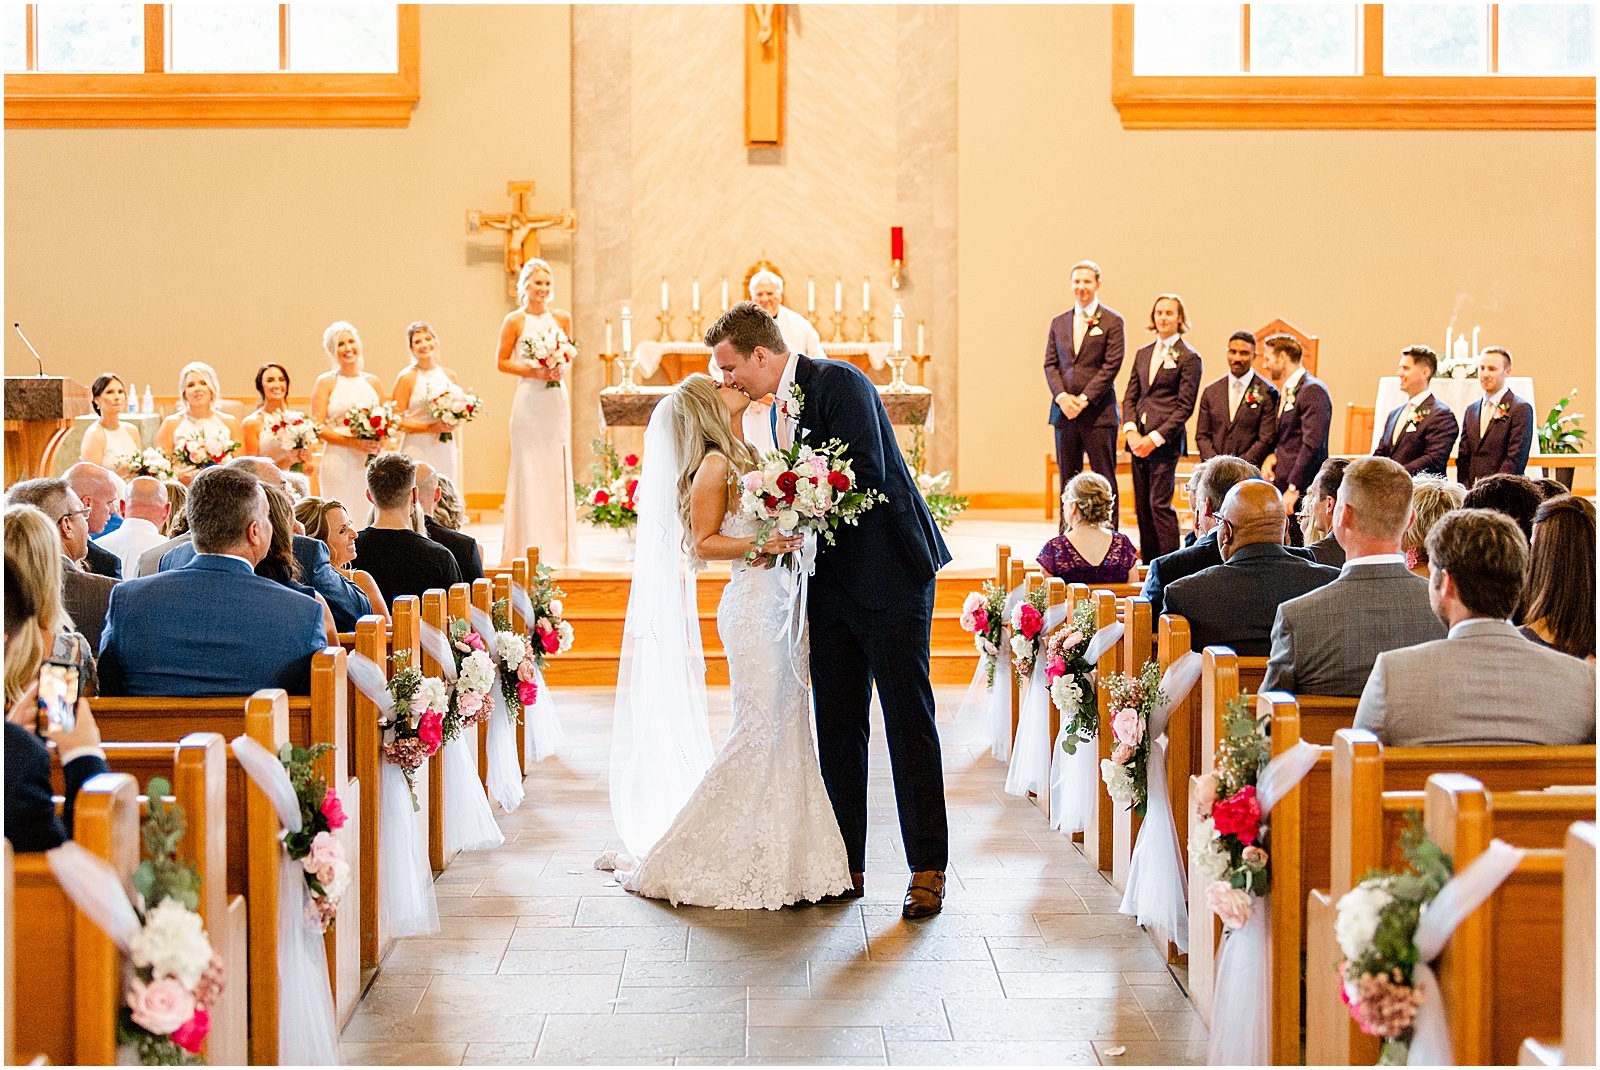 An Evansville Country Club Wedding | Madison and Christiaan | Bret and Brandie | Evansville Photographers | @bretandbrandie-0130.jpg